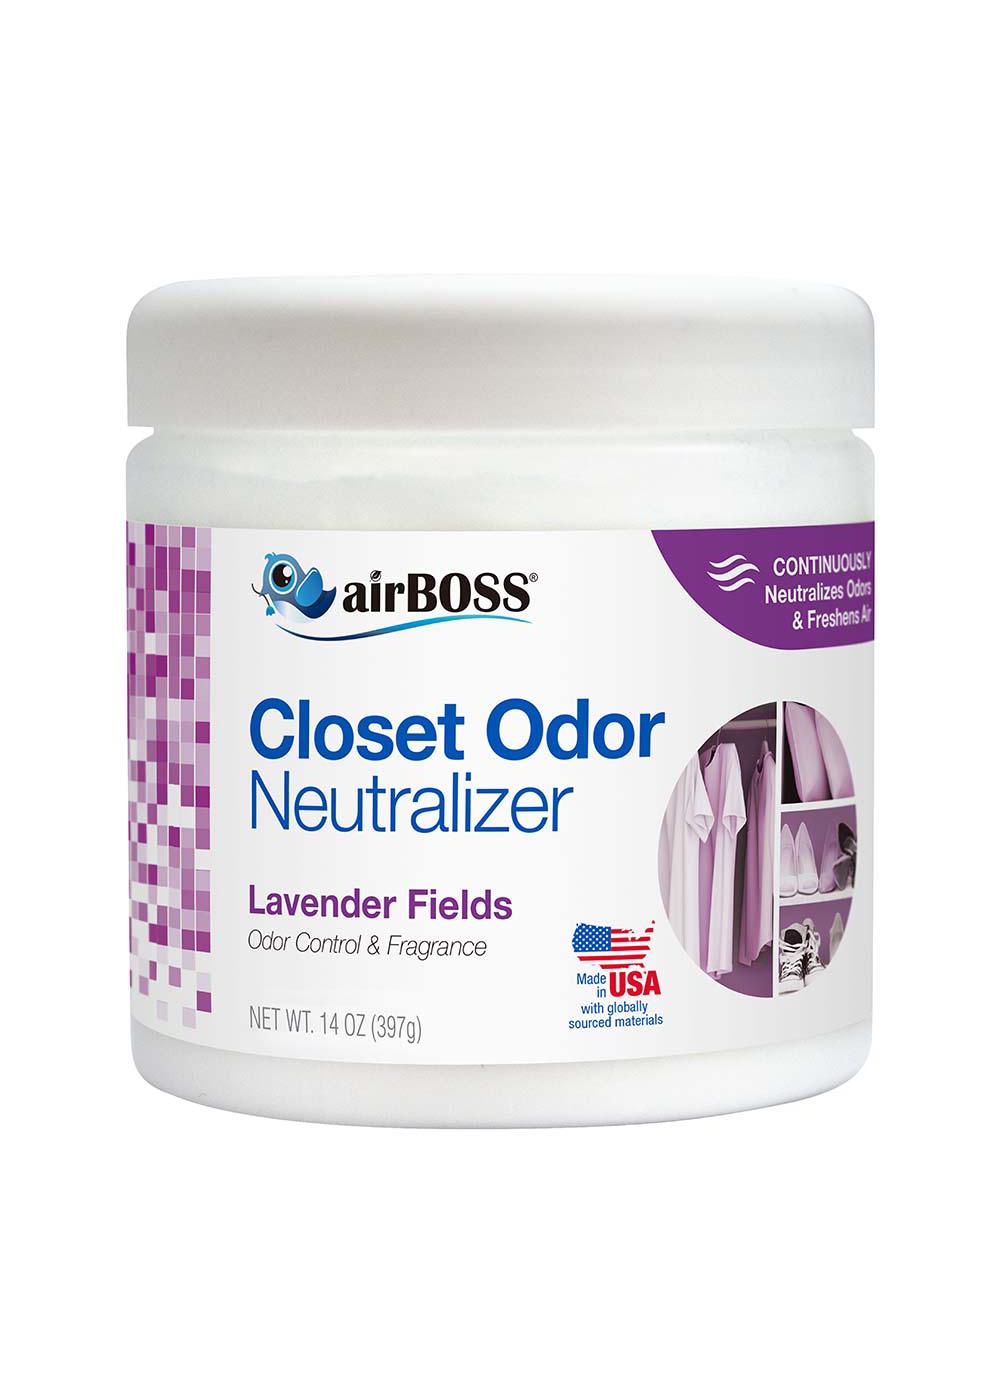 airBOSS Closet Odor Neutralizer - Lavender Fields; image 1 of 2